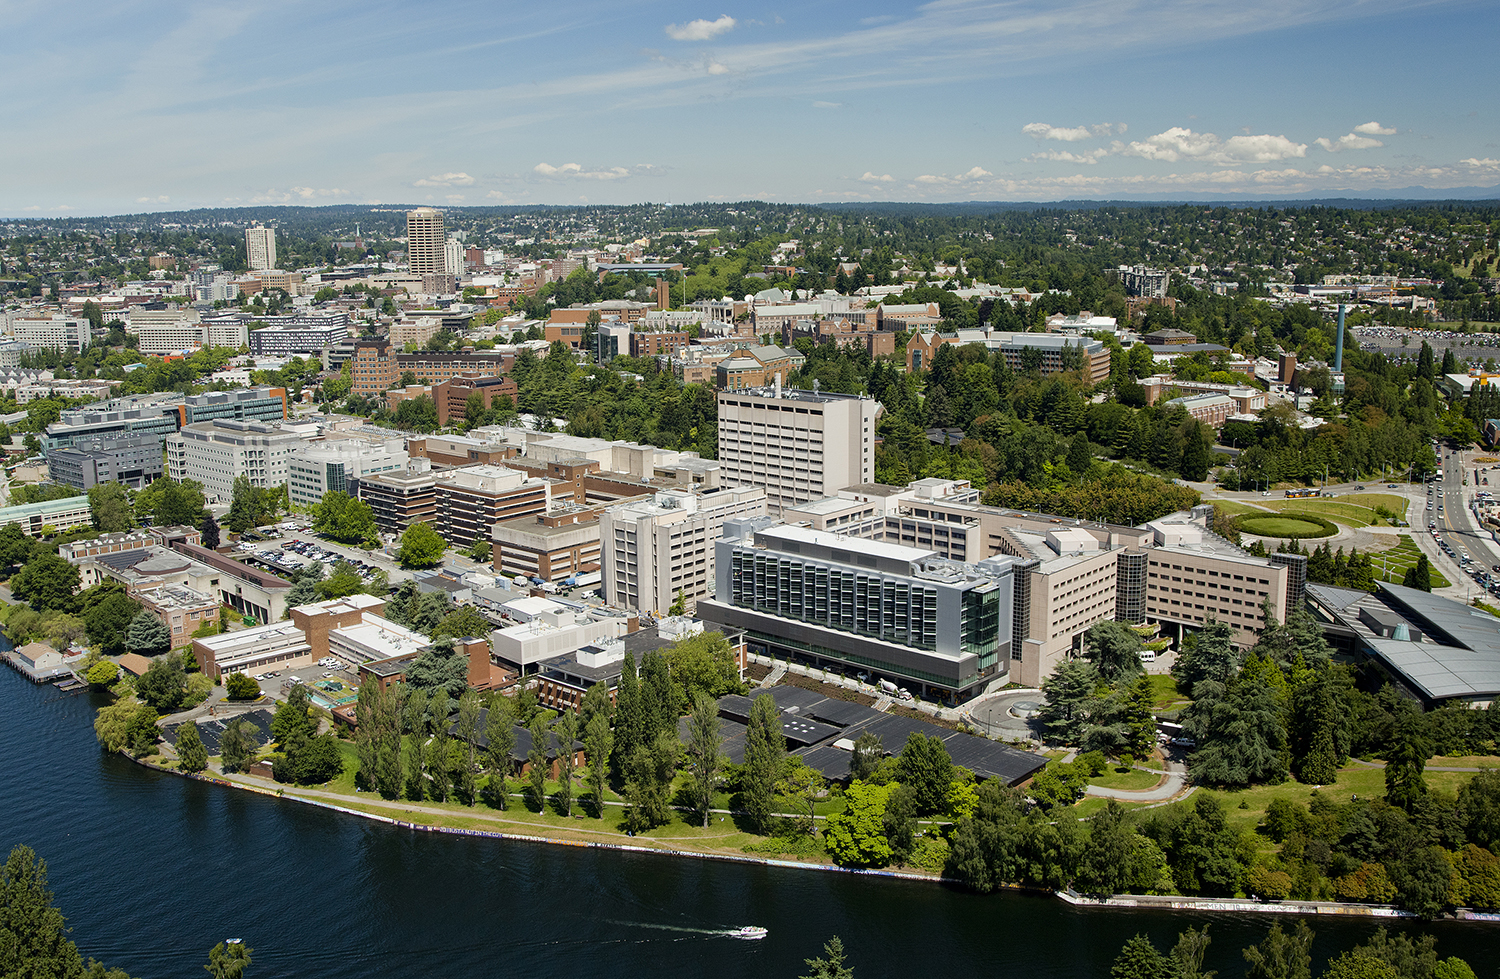 University of Washington Medical Center at Montlake (UWMC)